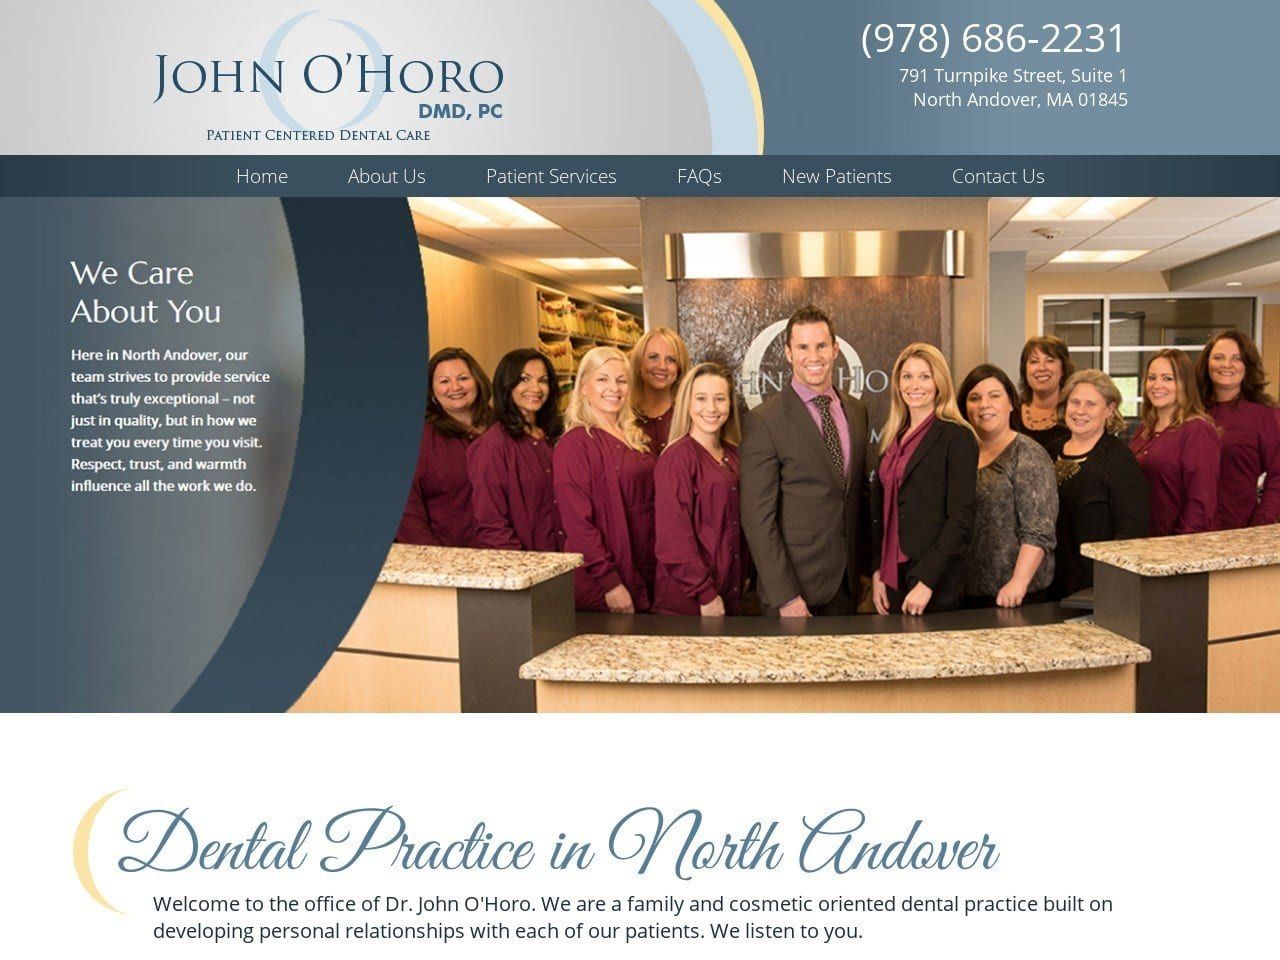 John OHoro DMD PC Website Screenshot from northandoverdentist.com